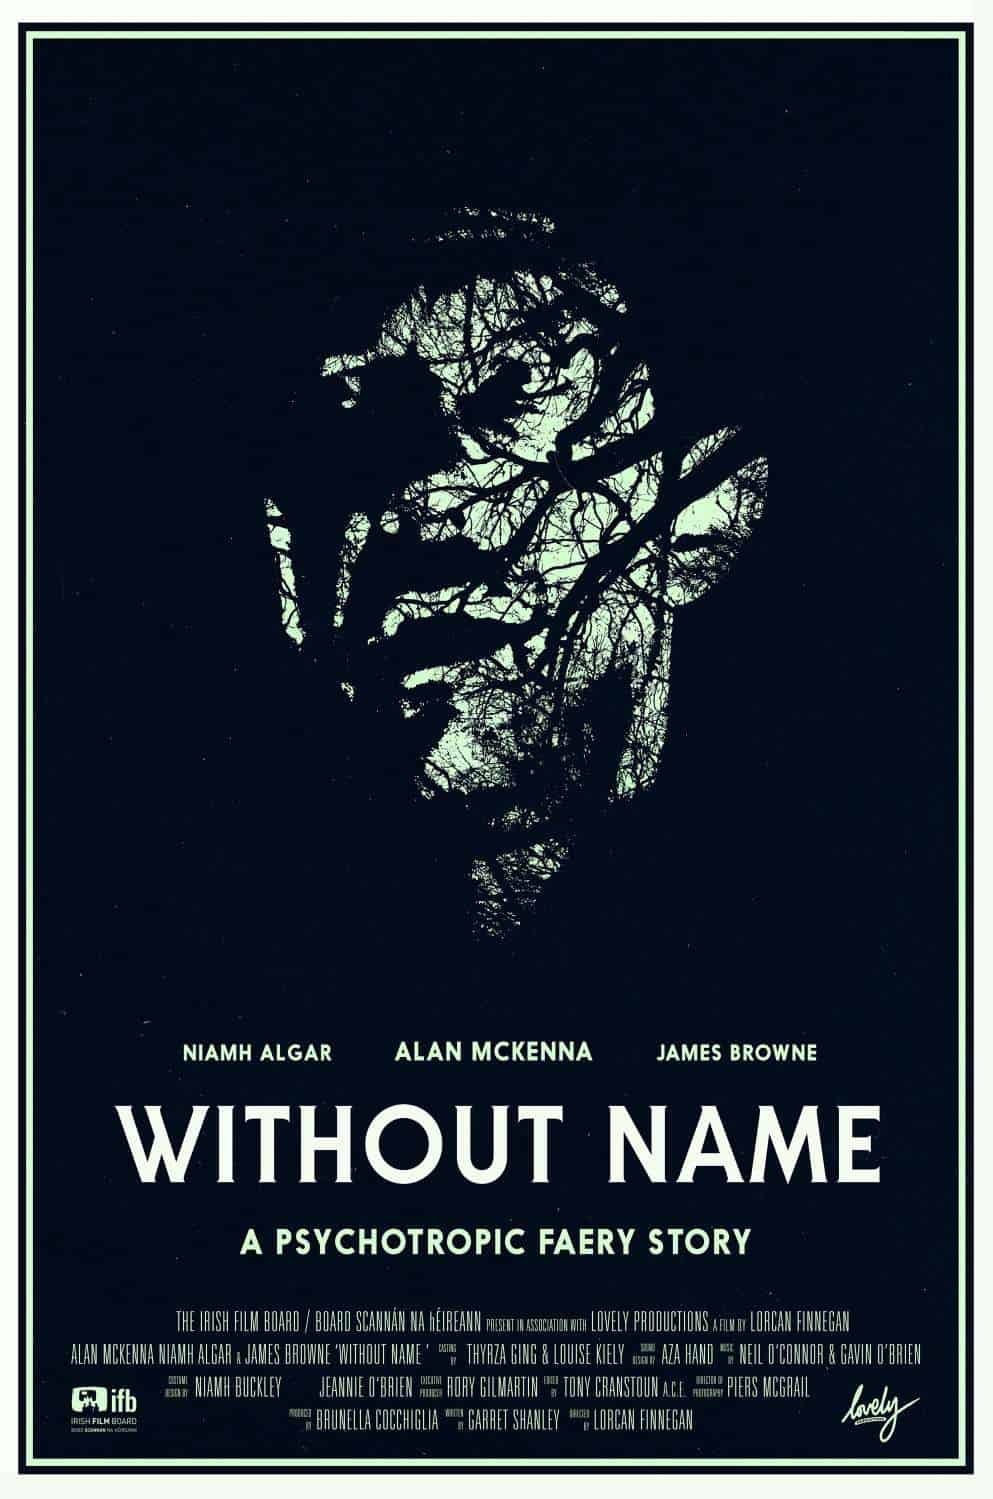 Vivarium similar movies Without Name (2016)